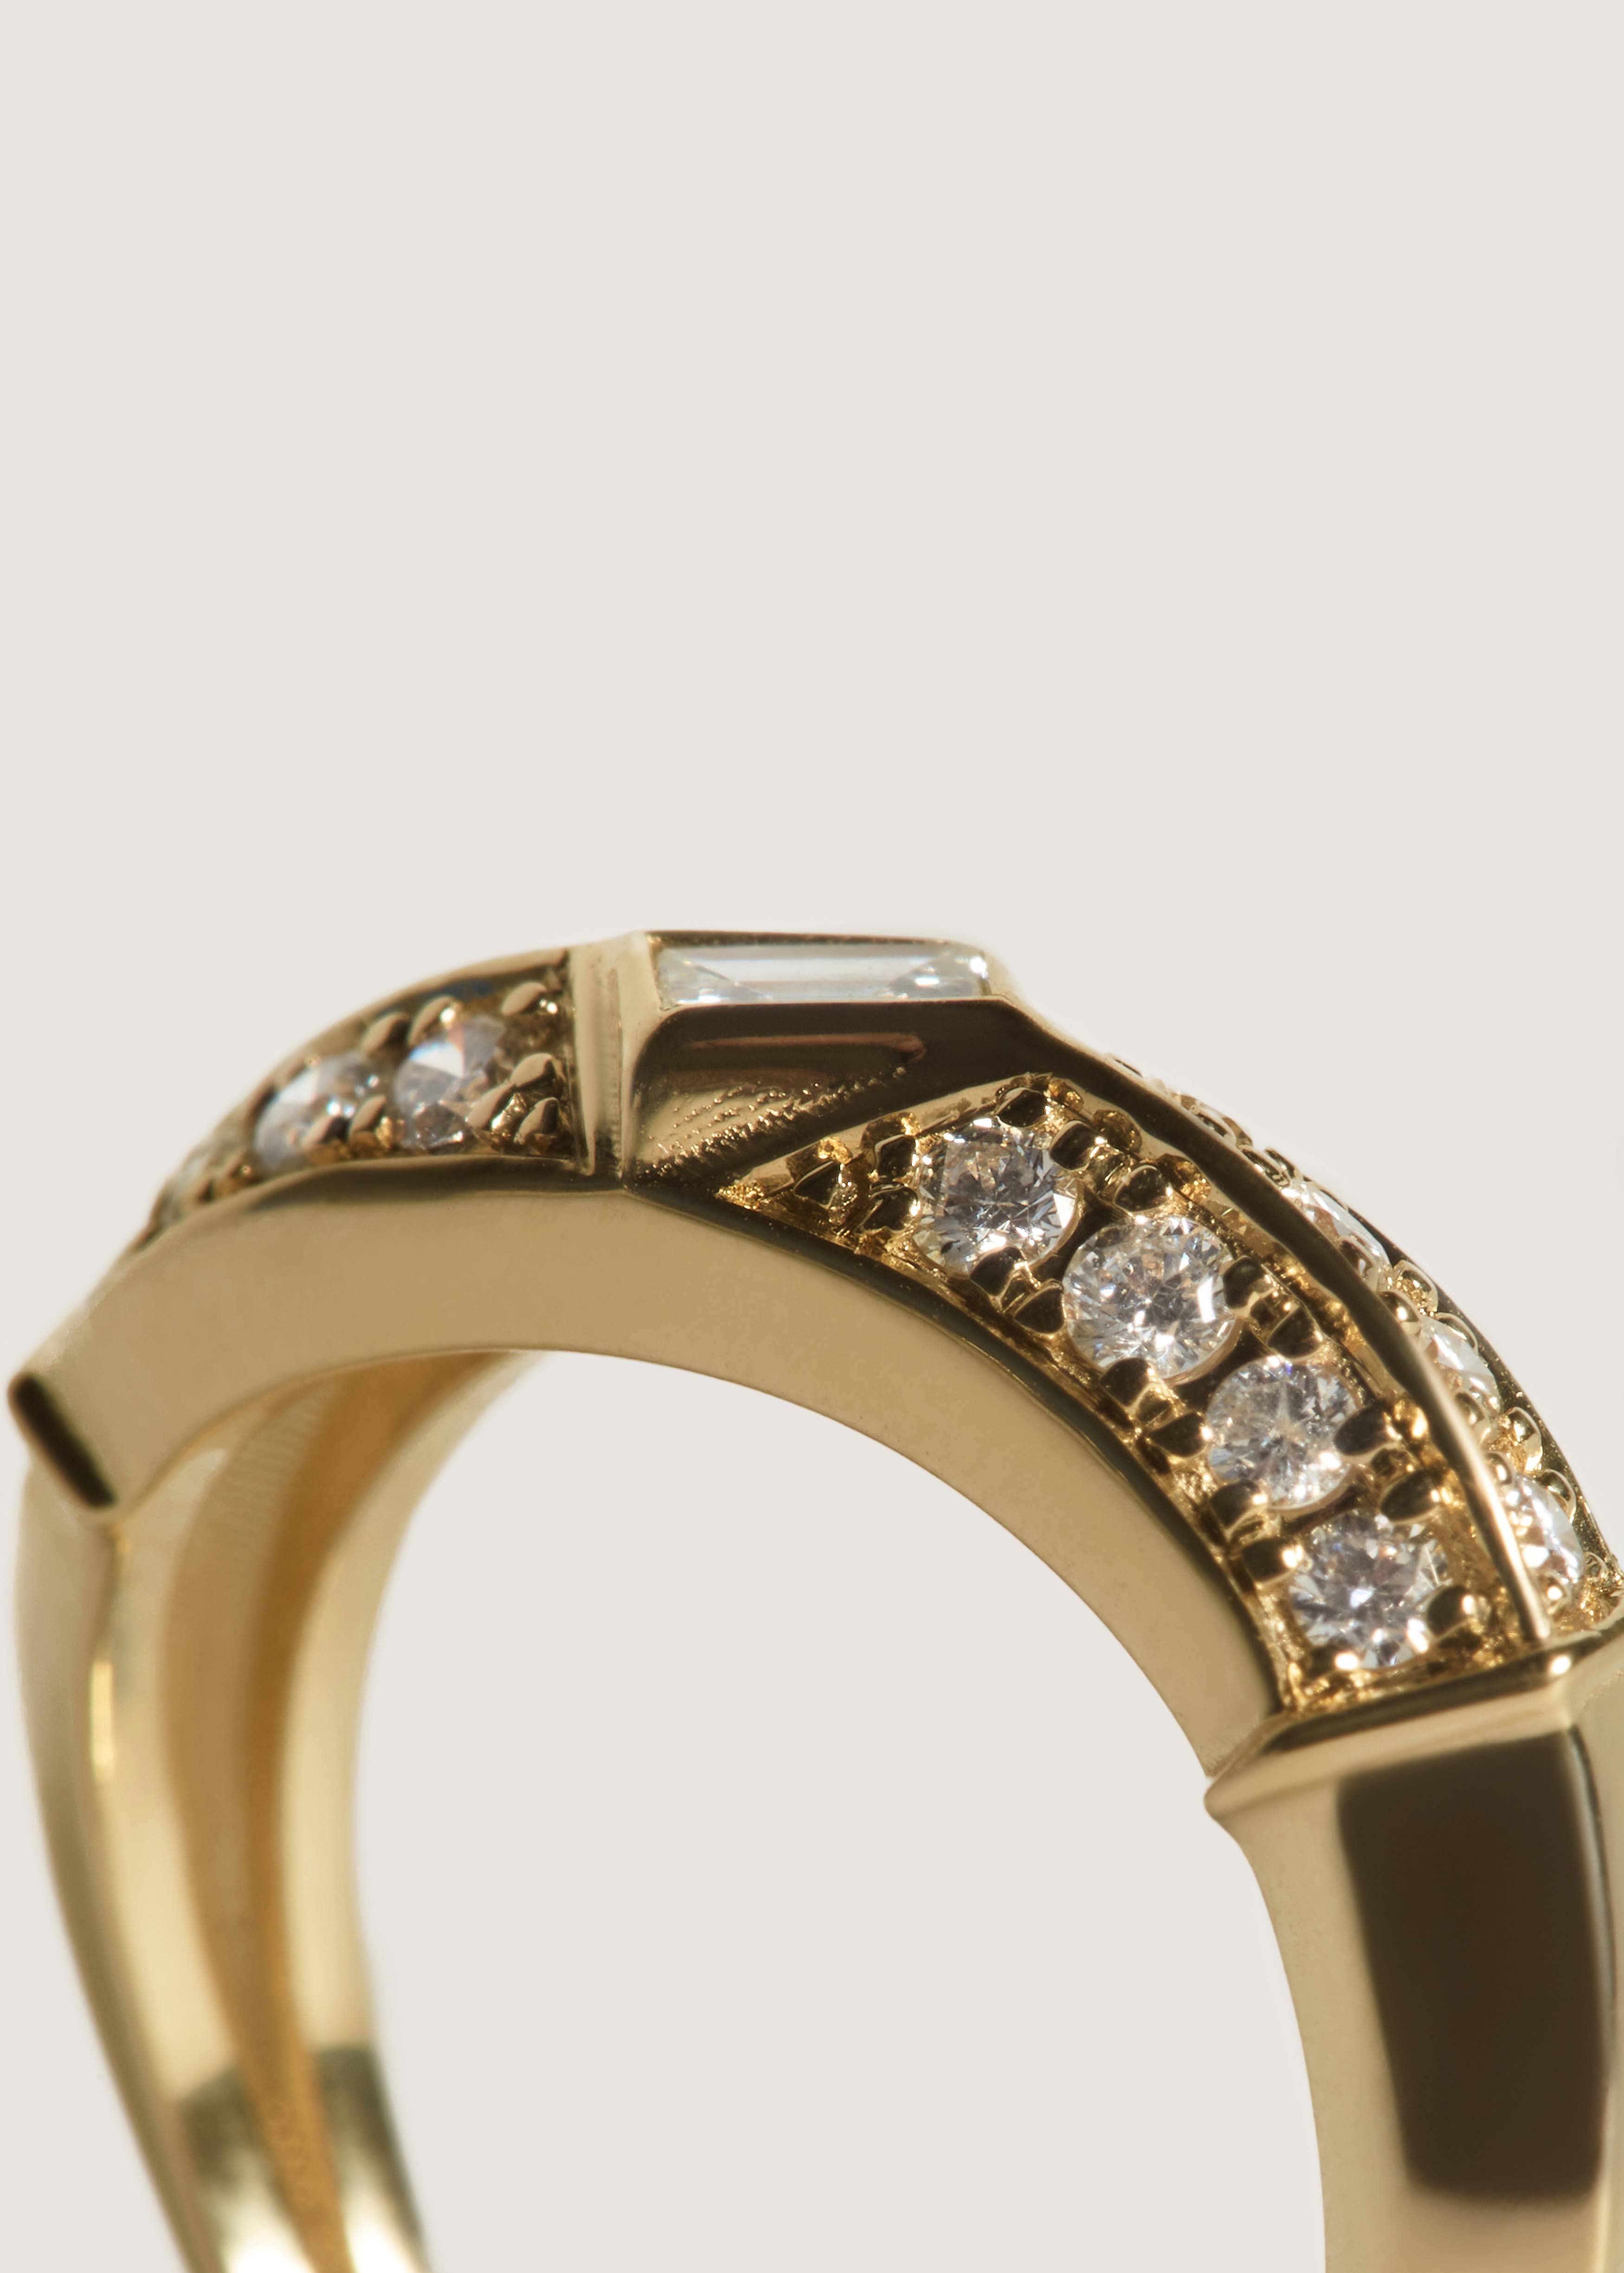 alt="close up of Franco Curved Ring"